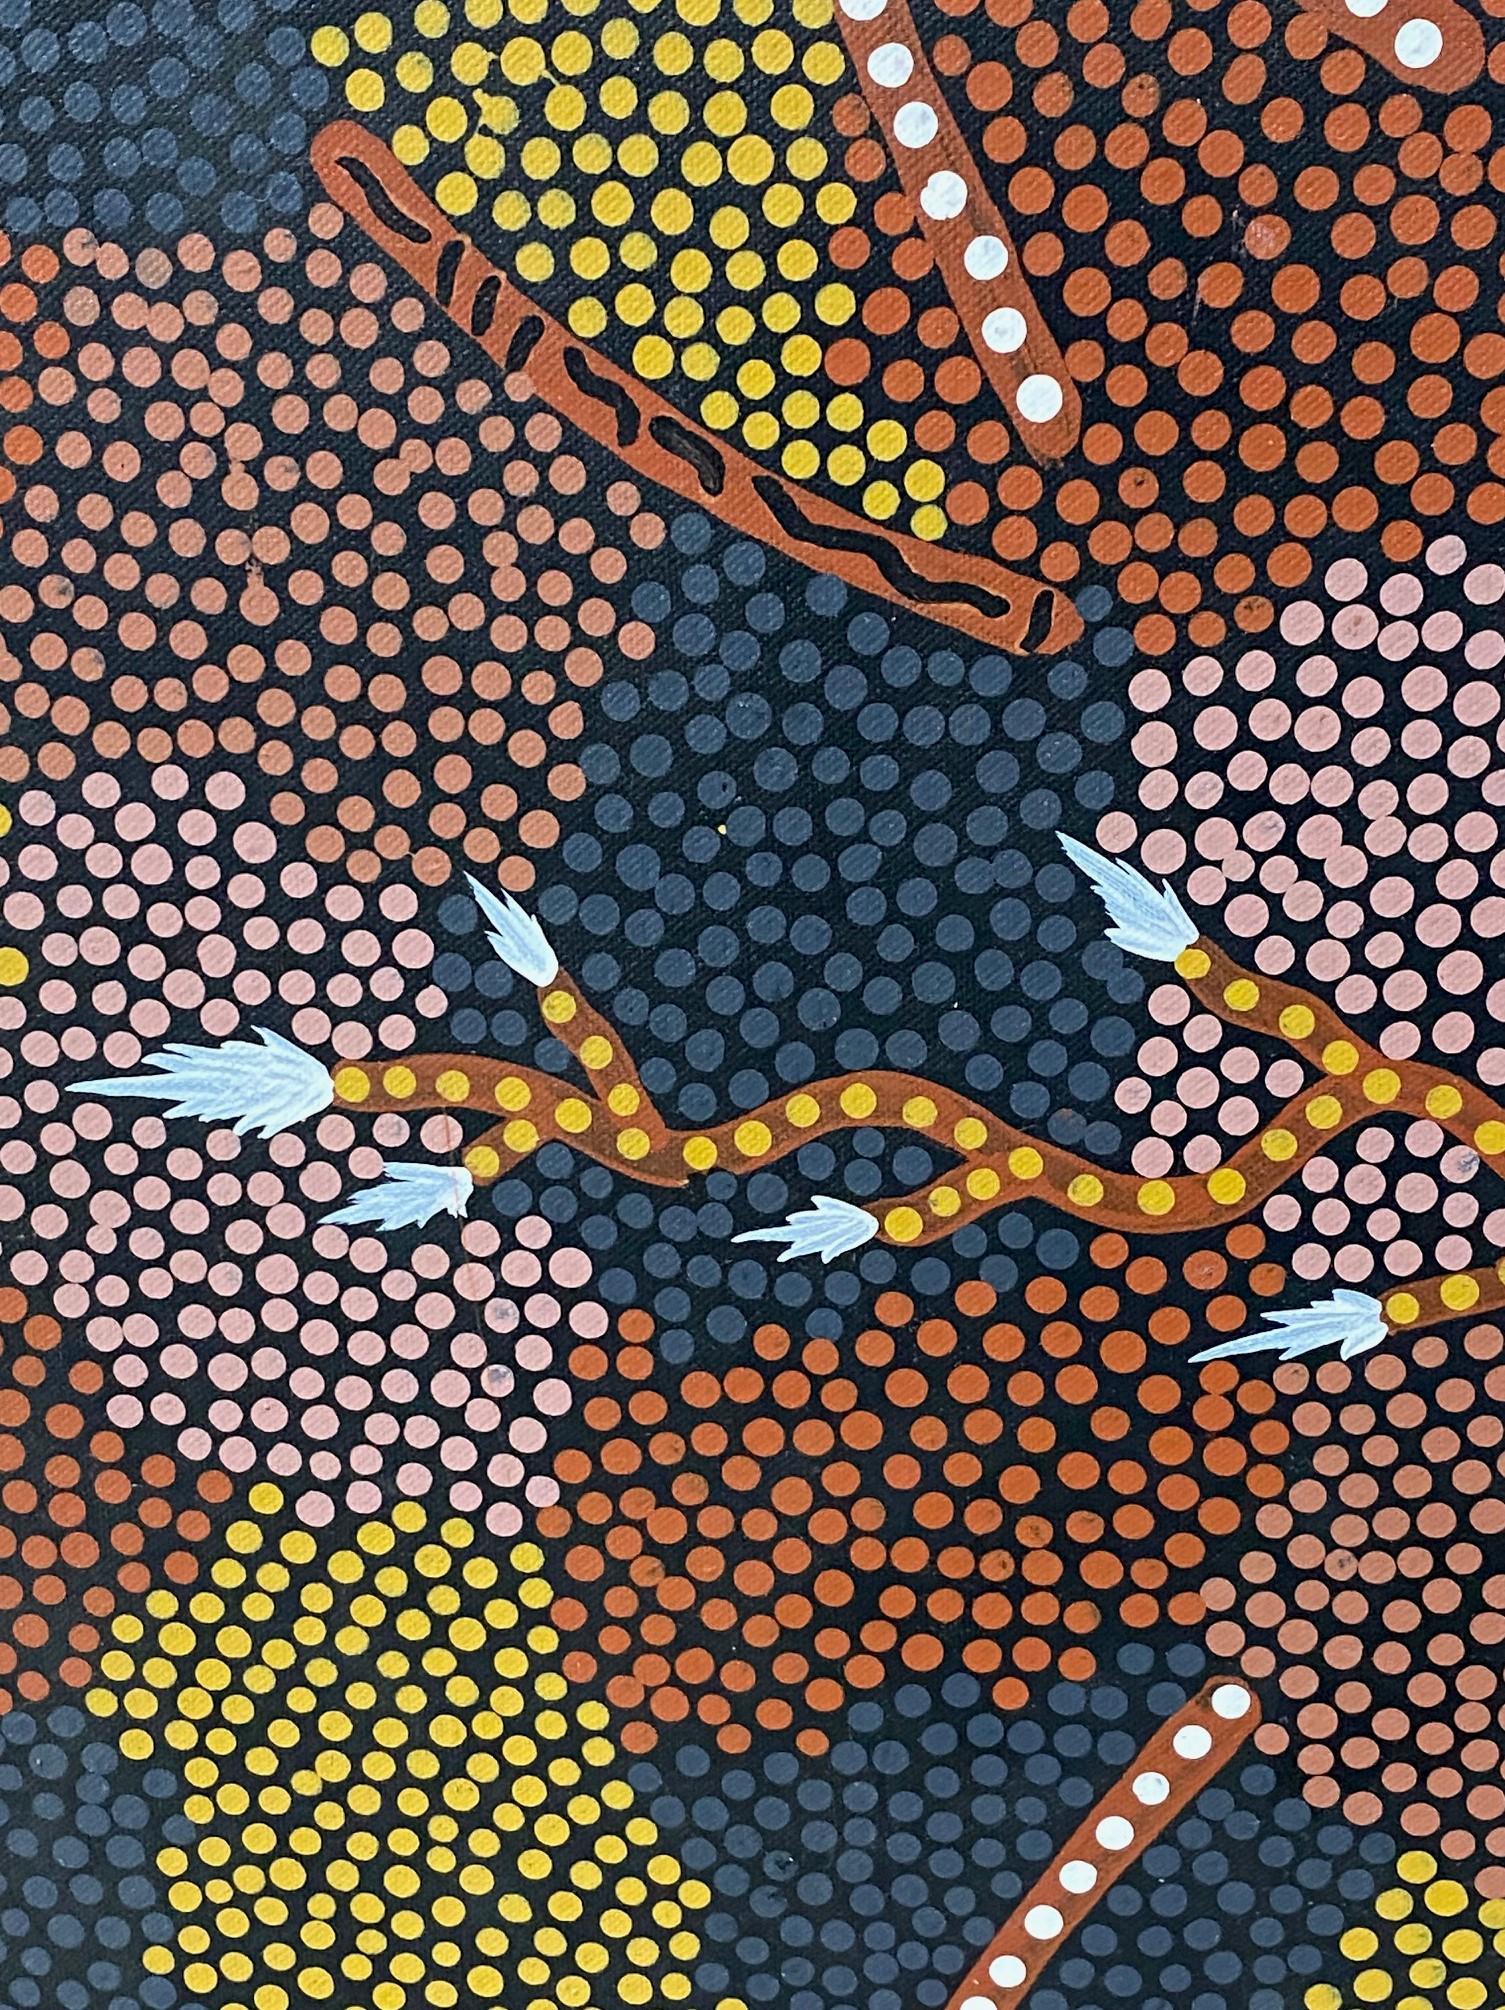 Australian Clifford Possum Tjapaltjarri Indigenous Aboriginal Art Large Original Painting For Sale